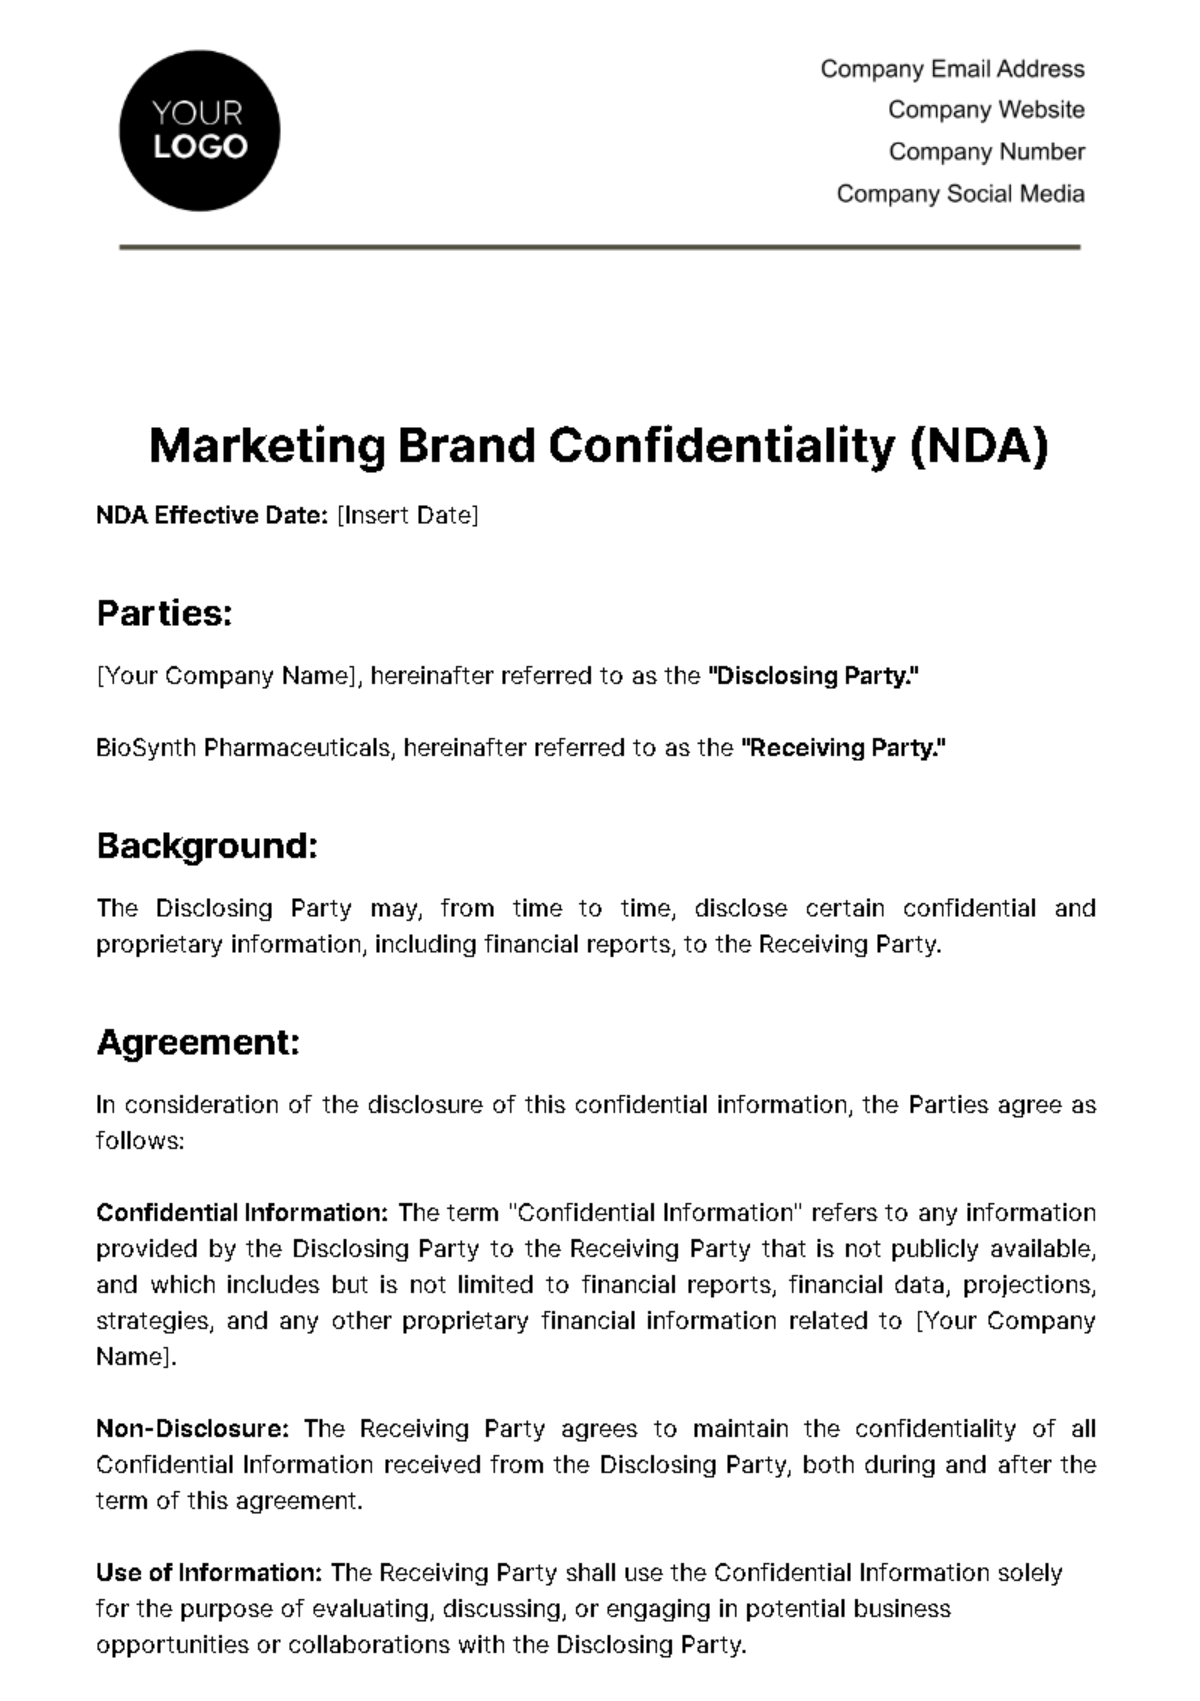 Free Marketing Brand Confidentiality NDA Template